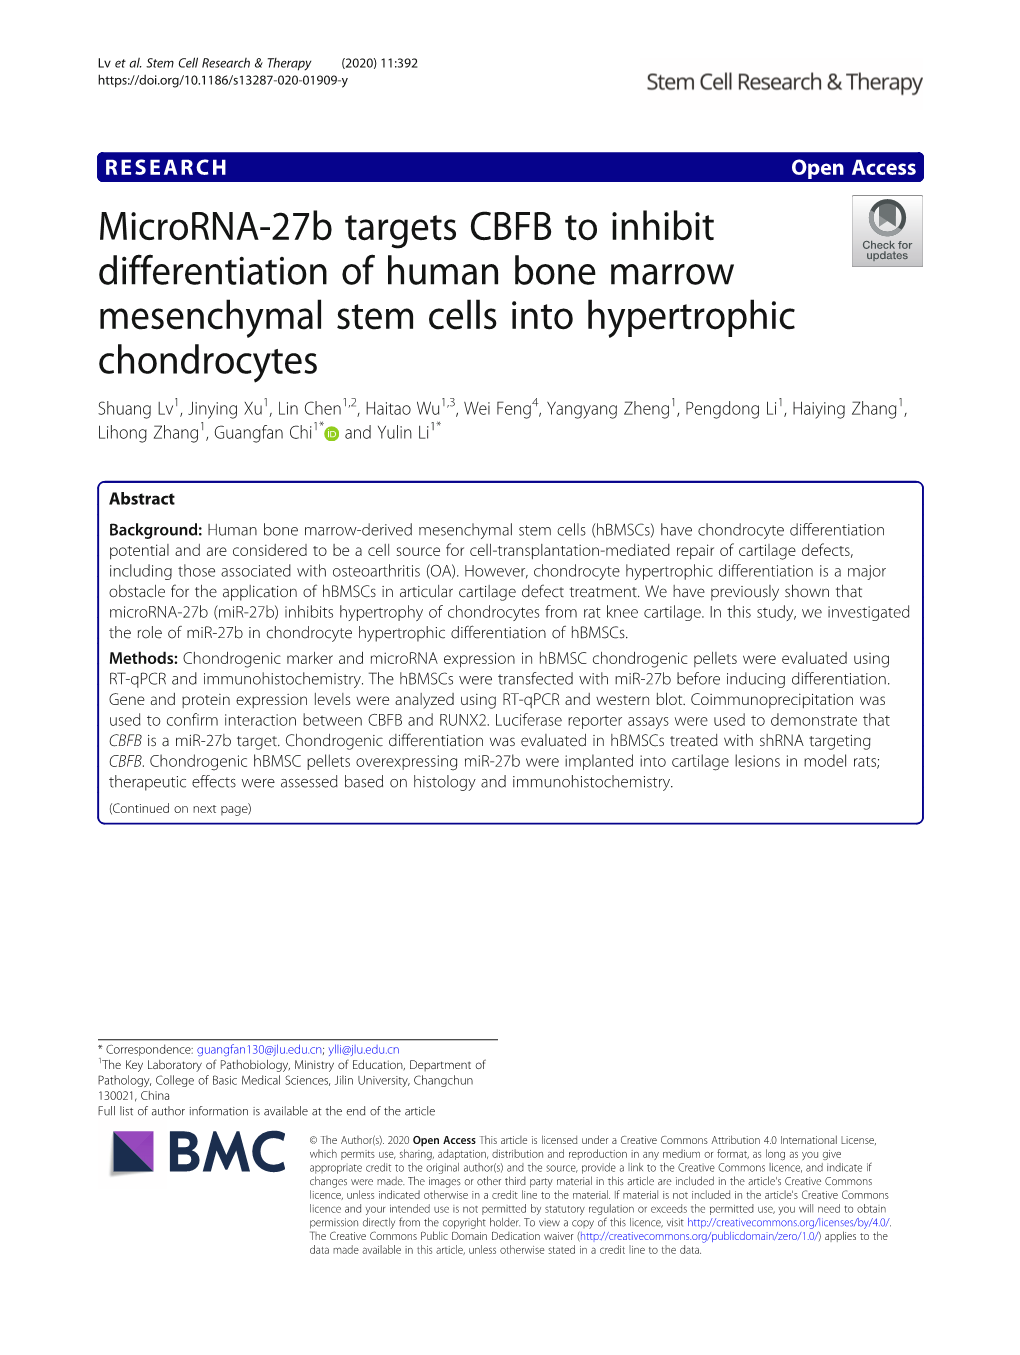 Microrna-27B Targets CBFB to Inhibit Differentiation of Human Bone Marrow Mesenchymal Stem Cells Into Hypertrophic Chondrocytes